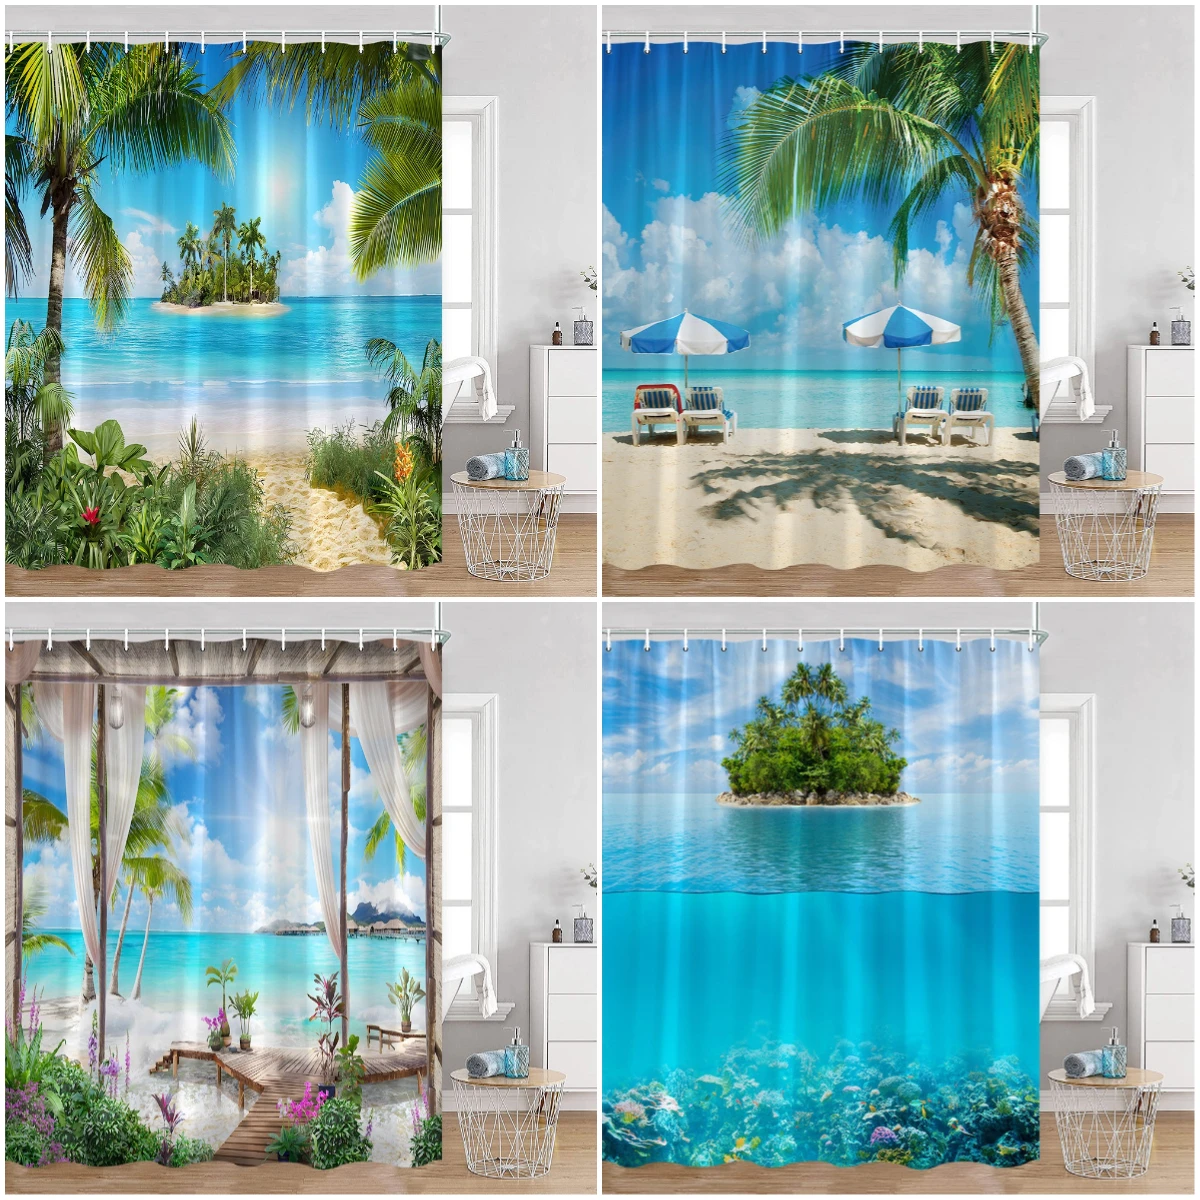 

Beach Shower Curtain Seaside View Coconut Trees Summer Vacation Bathroom Curtain Polyester Fabric Home Decortaion for Bath